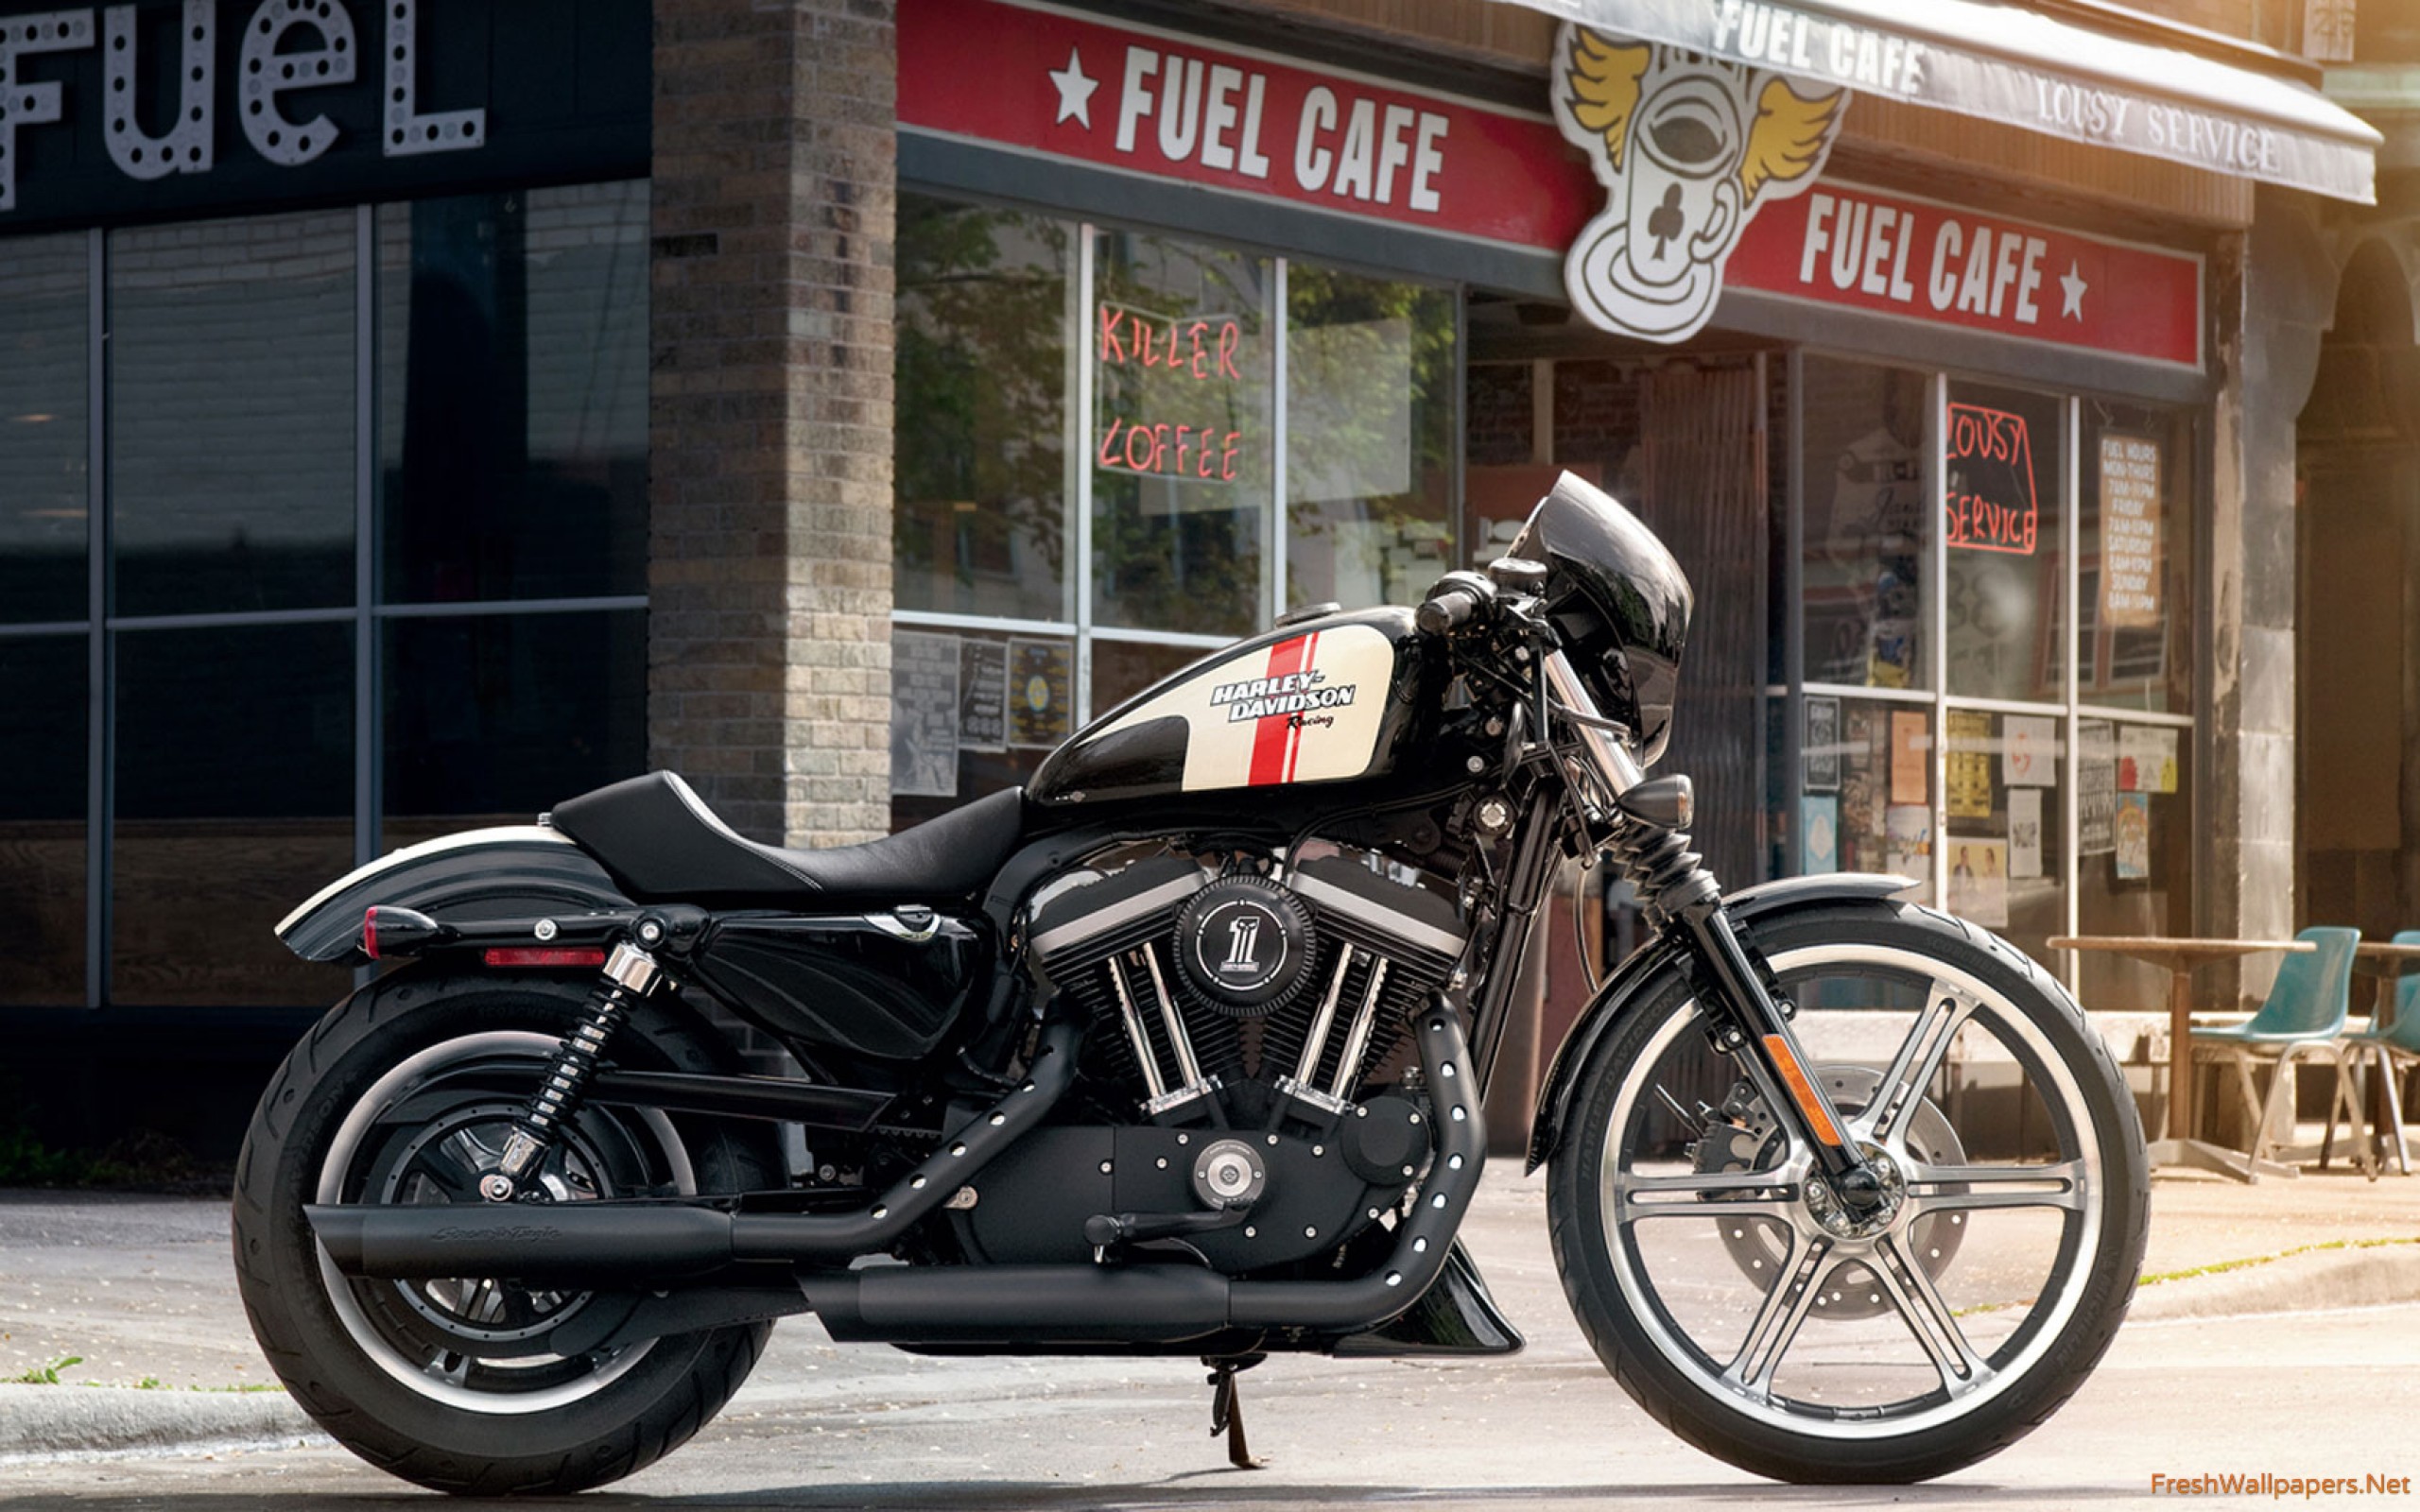 2015 Harley Davidson Iron 883 wallpapers | Freshwallpapers